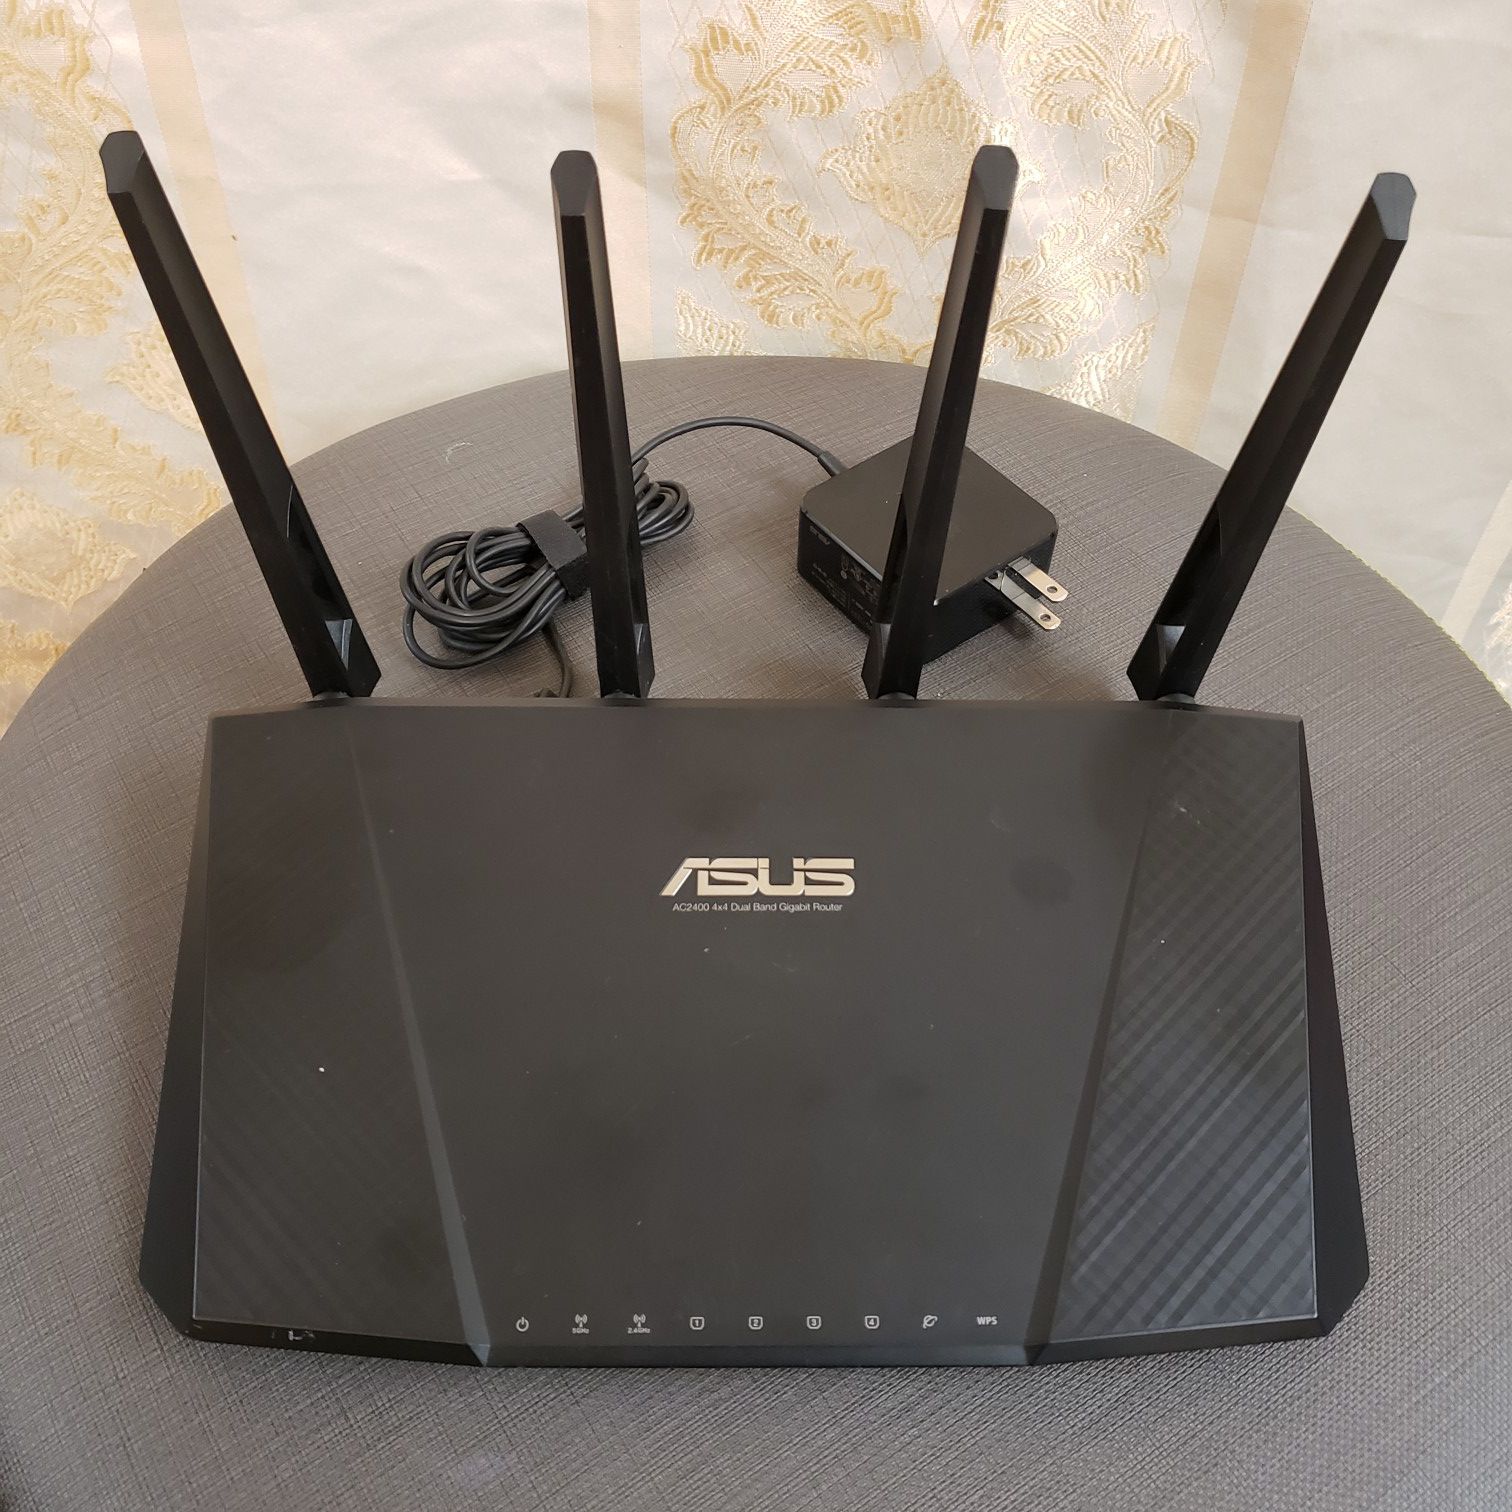 ASUS AC2400 4x4 Dual Band Gigabit Router (RT-AC87U)